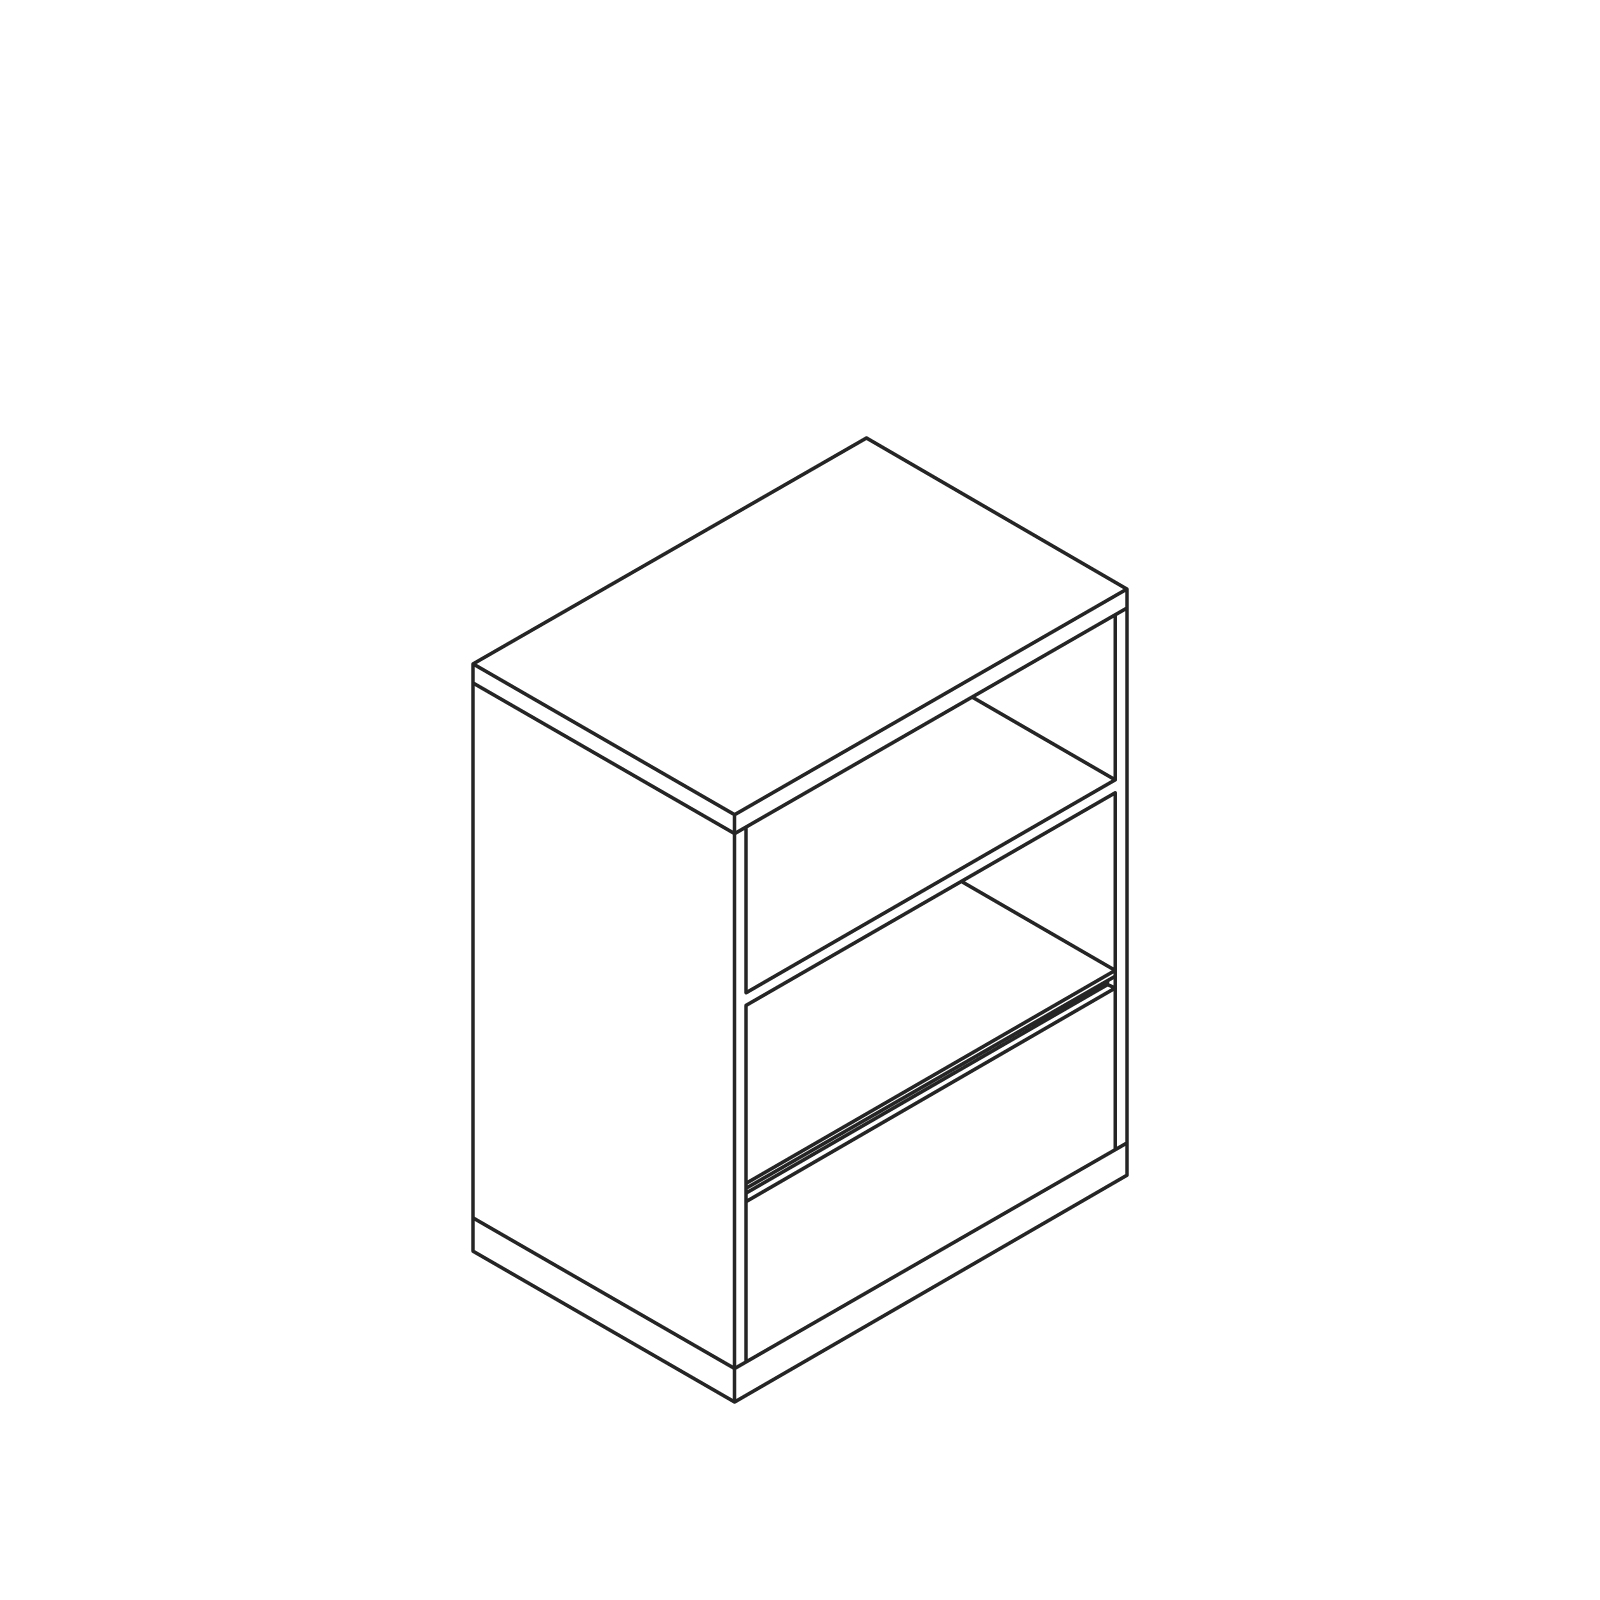 A line drawing - Meridian Powered Storage–Storage Case